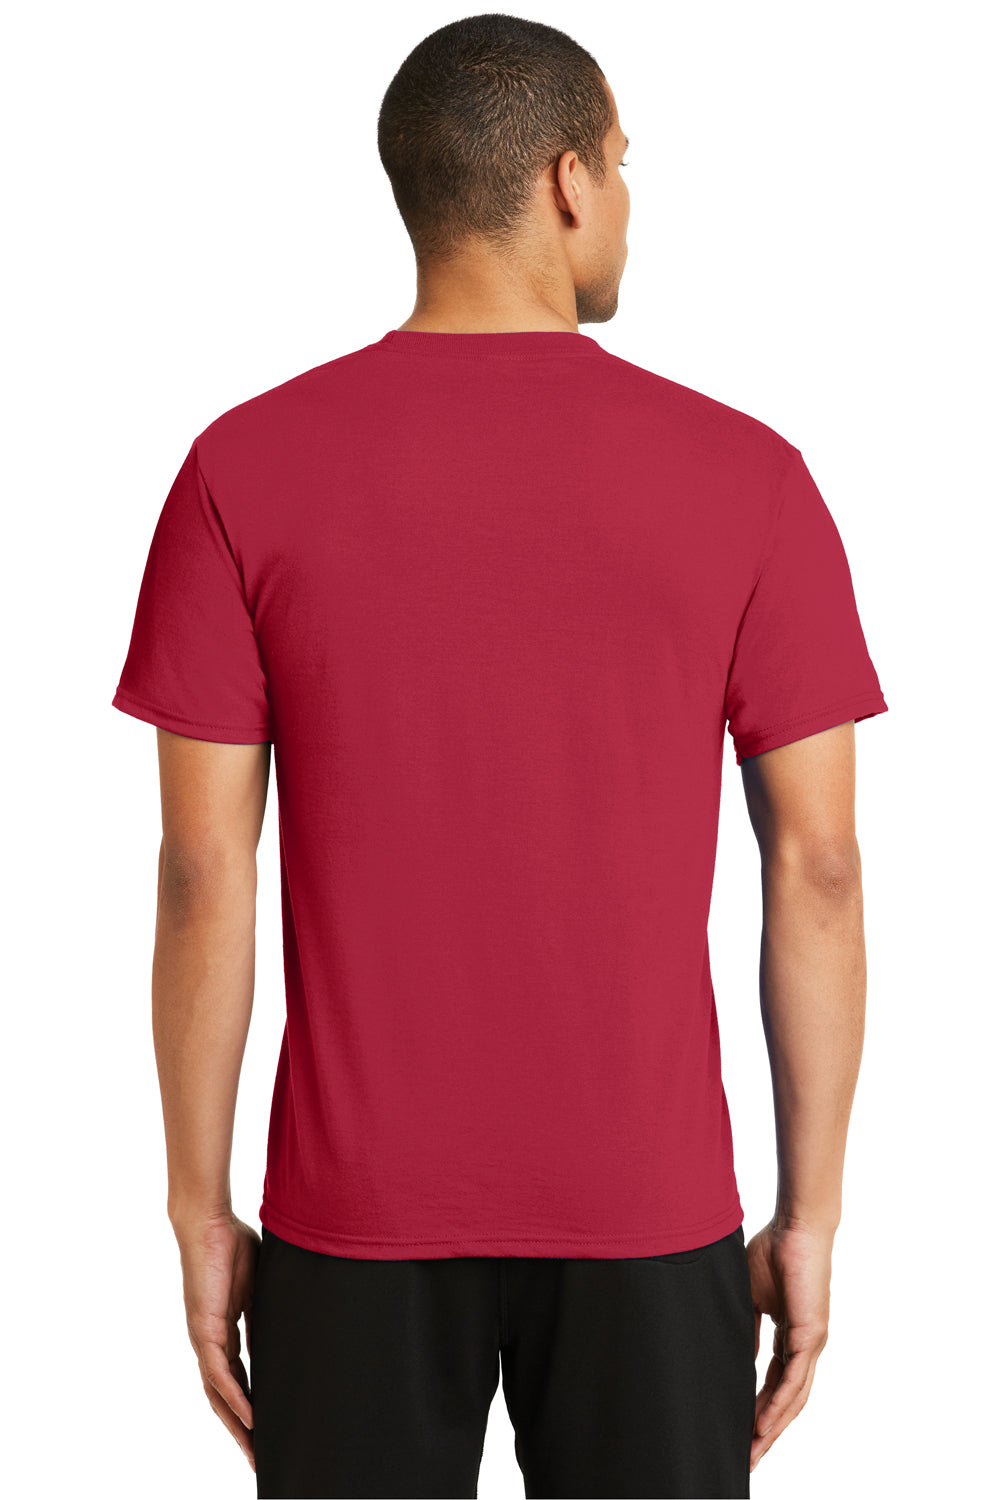 Port & Company PC381 Mens Dry Zone Performance Moisture Wicking Short Sleeve Crewneck T-Shirt Red Back